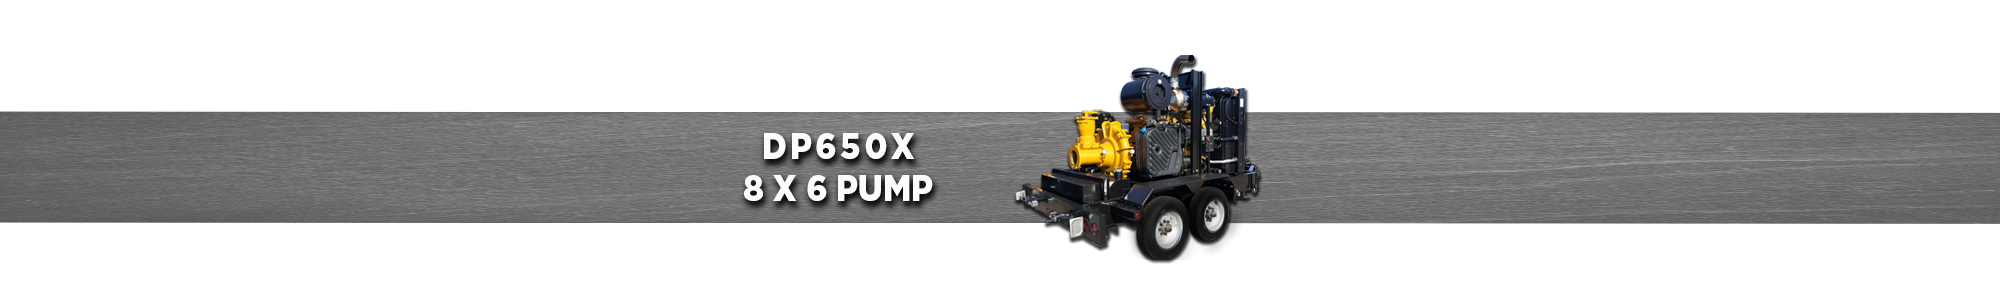 DP7650x 8x6 Pump